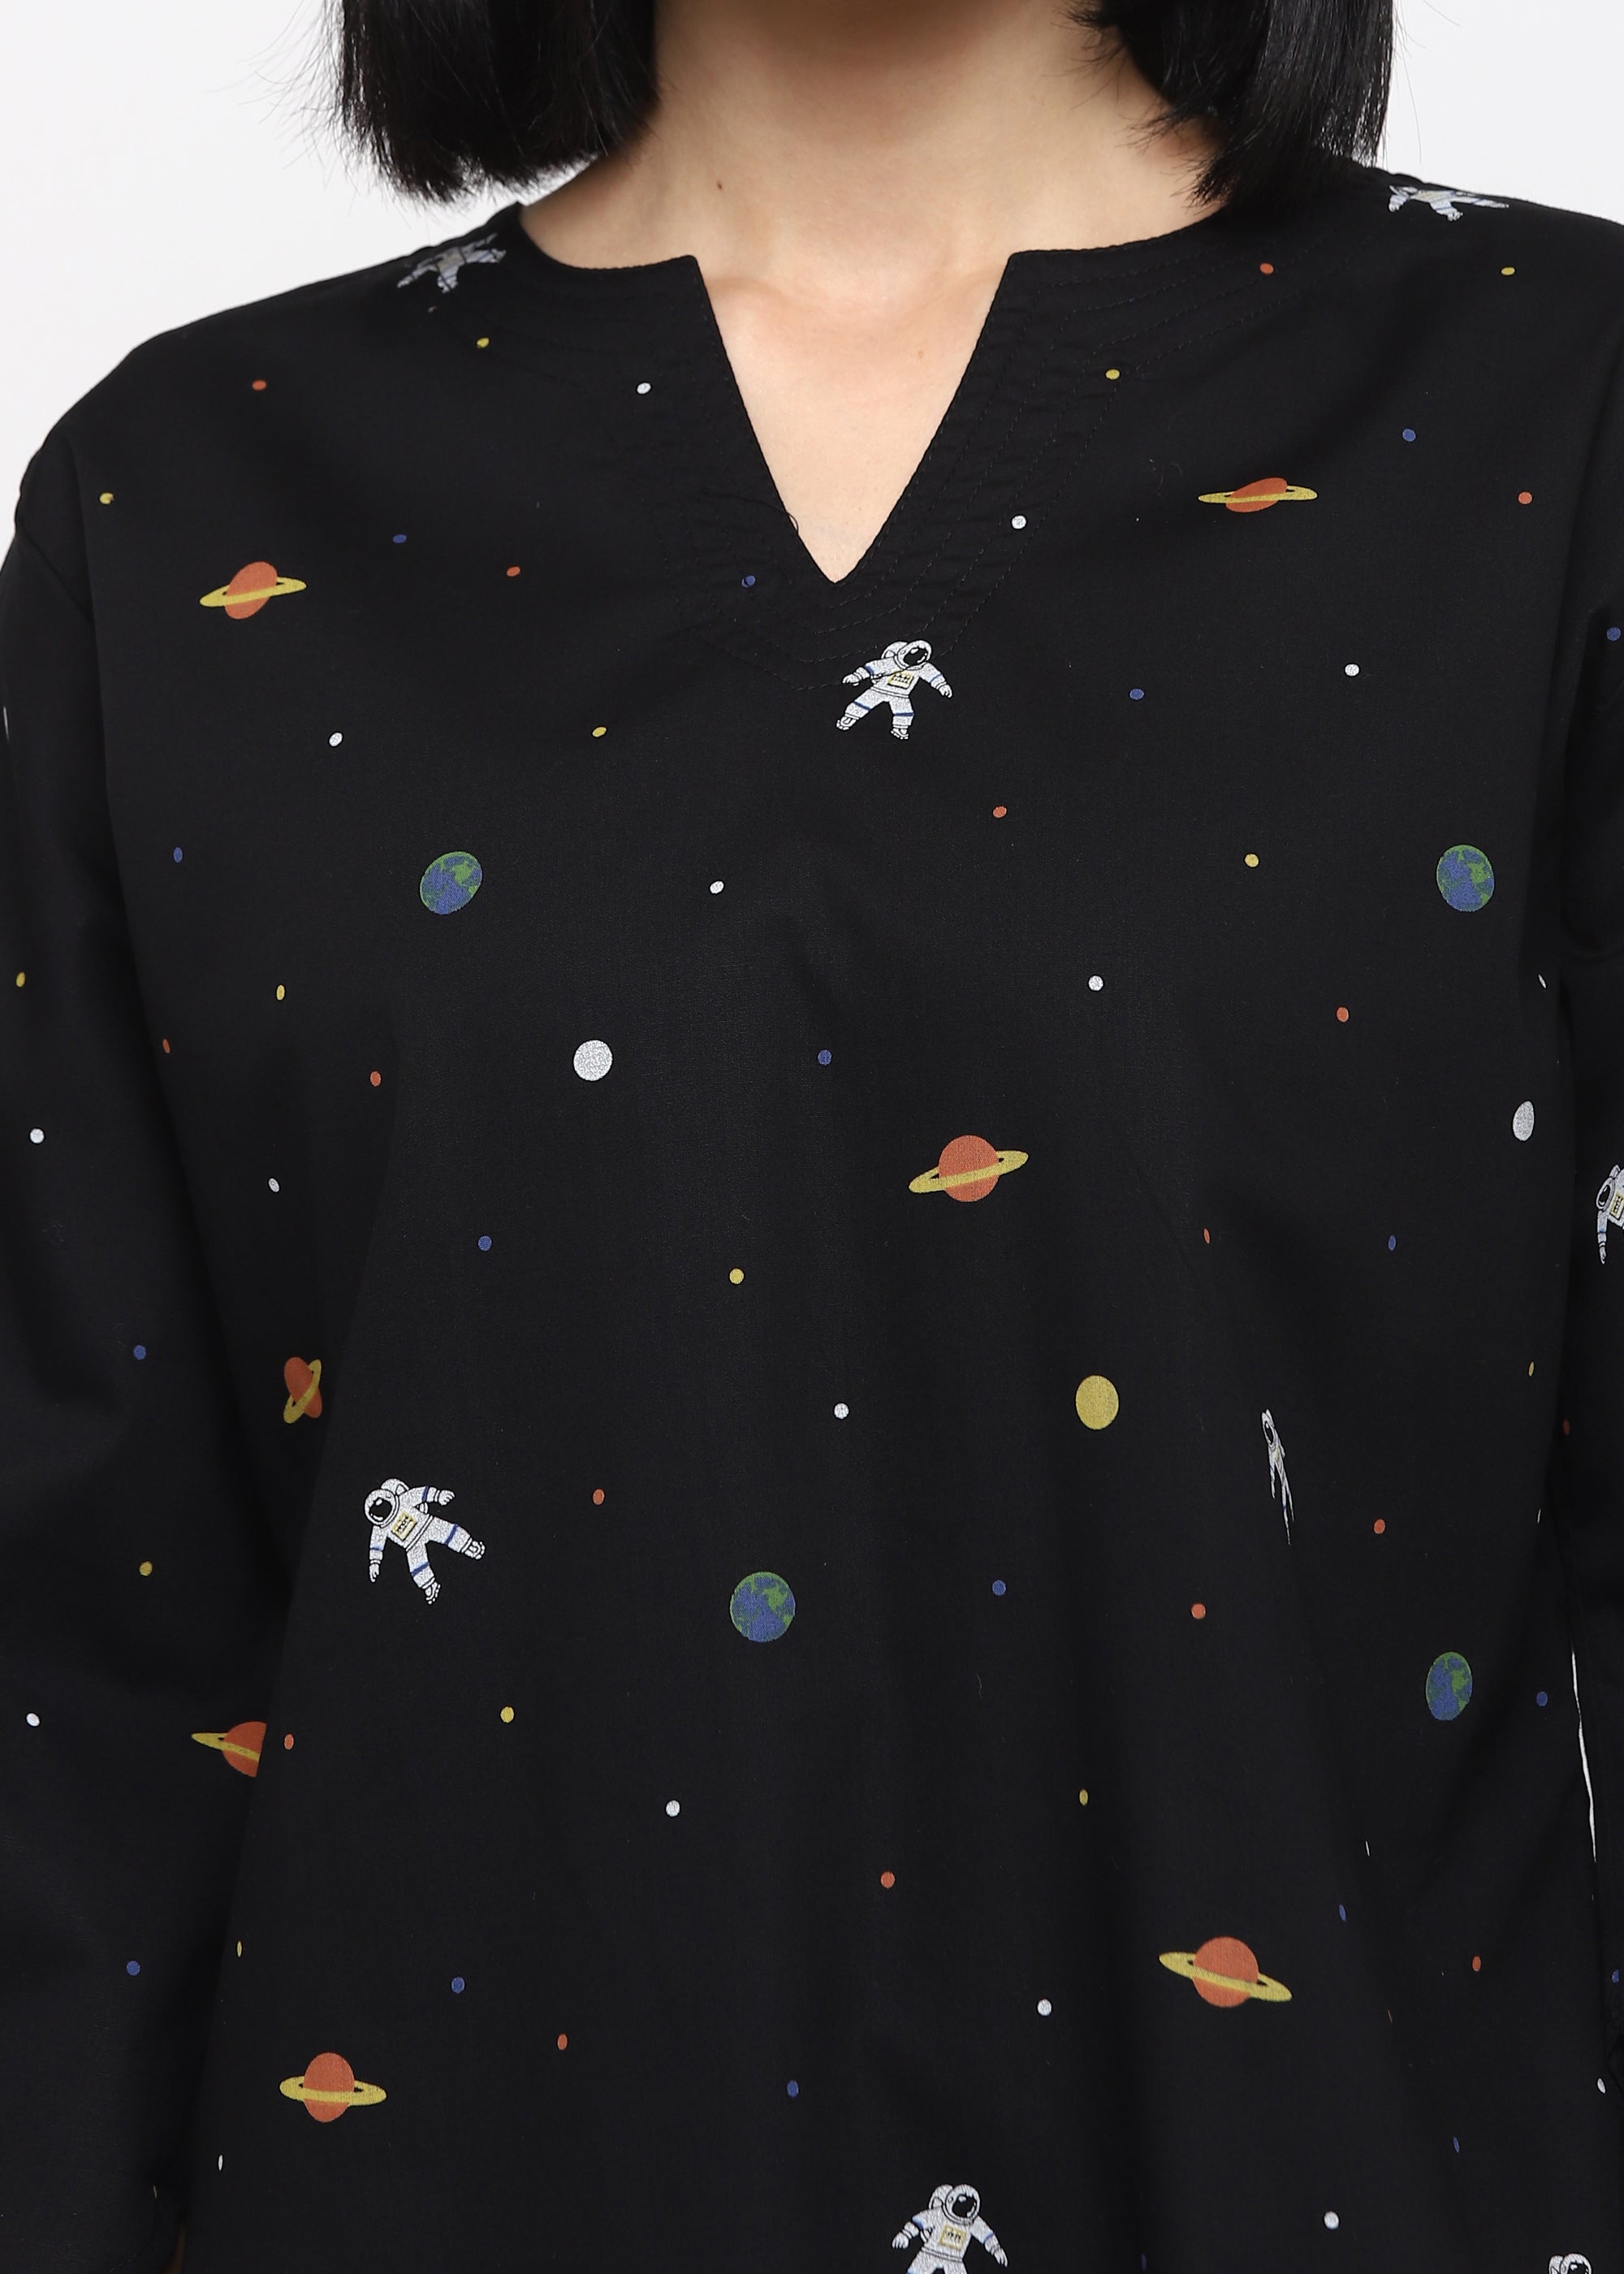 Space Print V Neck Women's Night Suit - Shopbloom